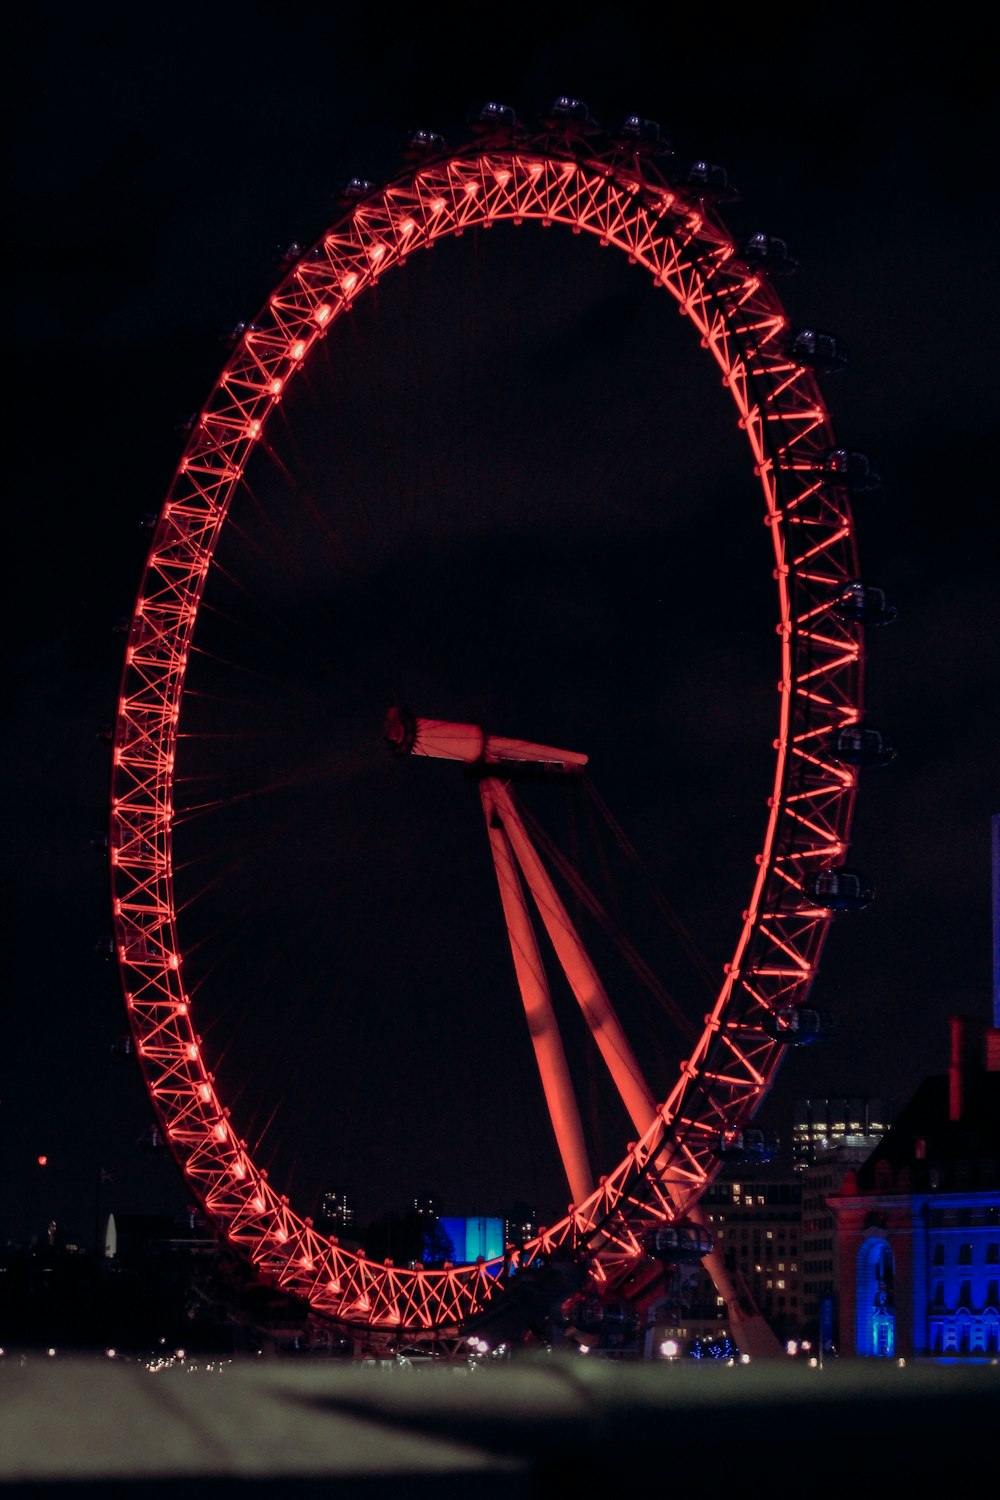 red Ferris wheel during nighttime